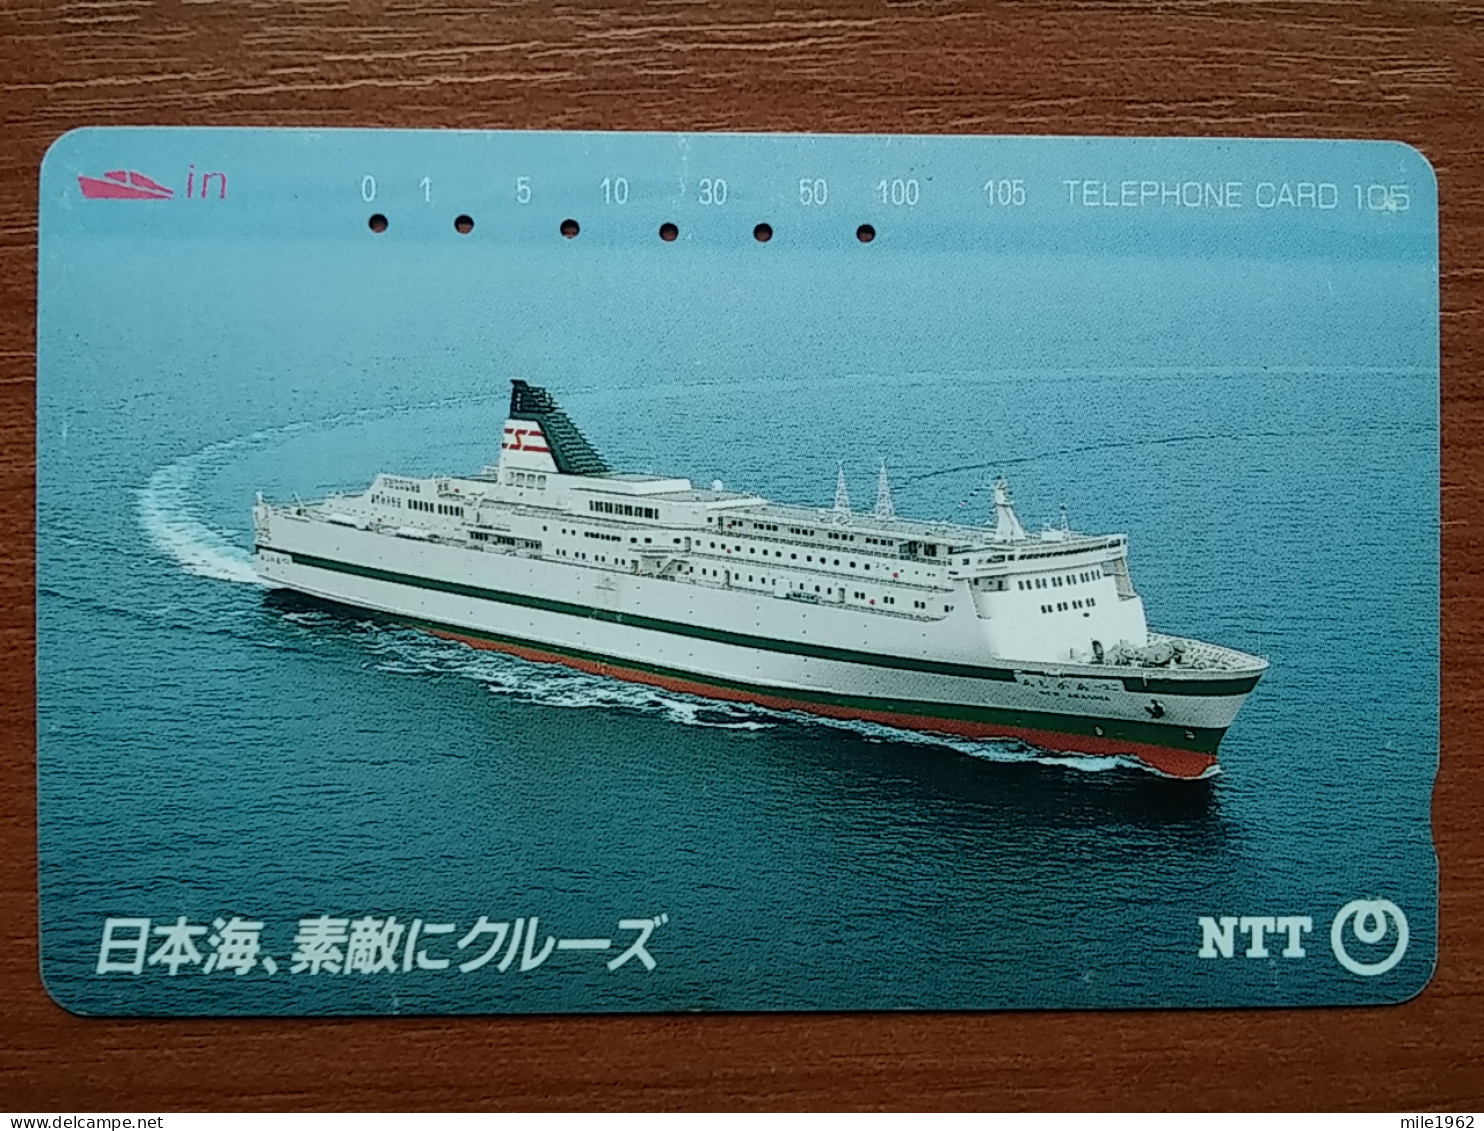 T-357 - JAPAN, Japon, Nipon, TELECARD, PHONECARD,  NTT 330-302, Ship, Navire - Boats